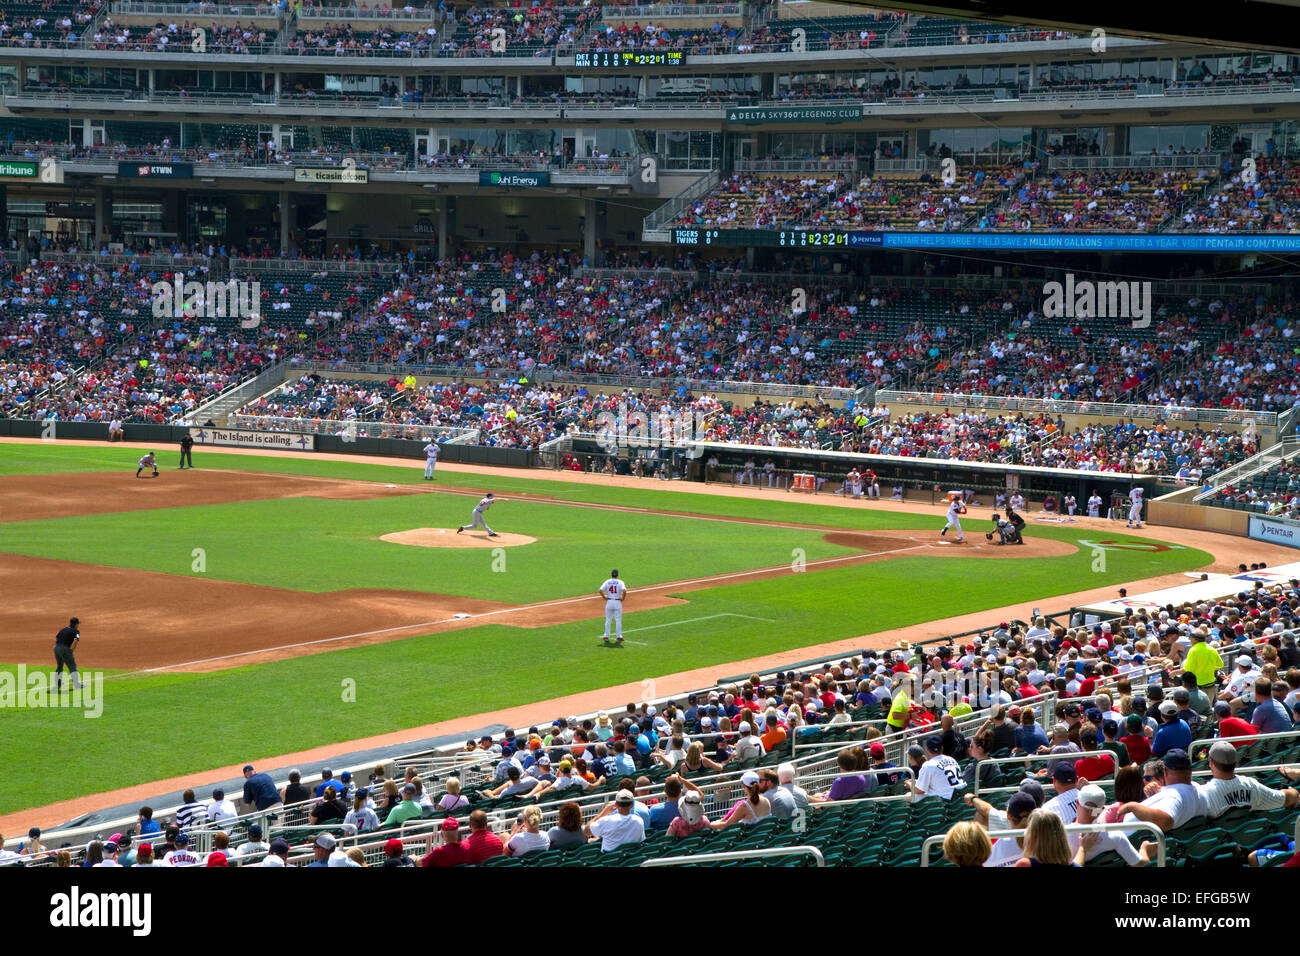 The baseball park at Target Field in Minneapolis, Minnesota, USA. Stock Photo